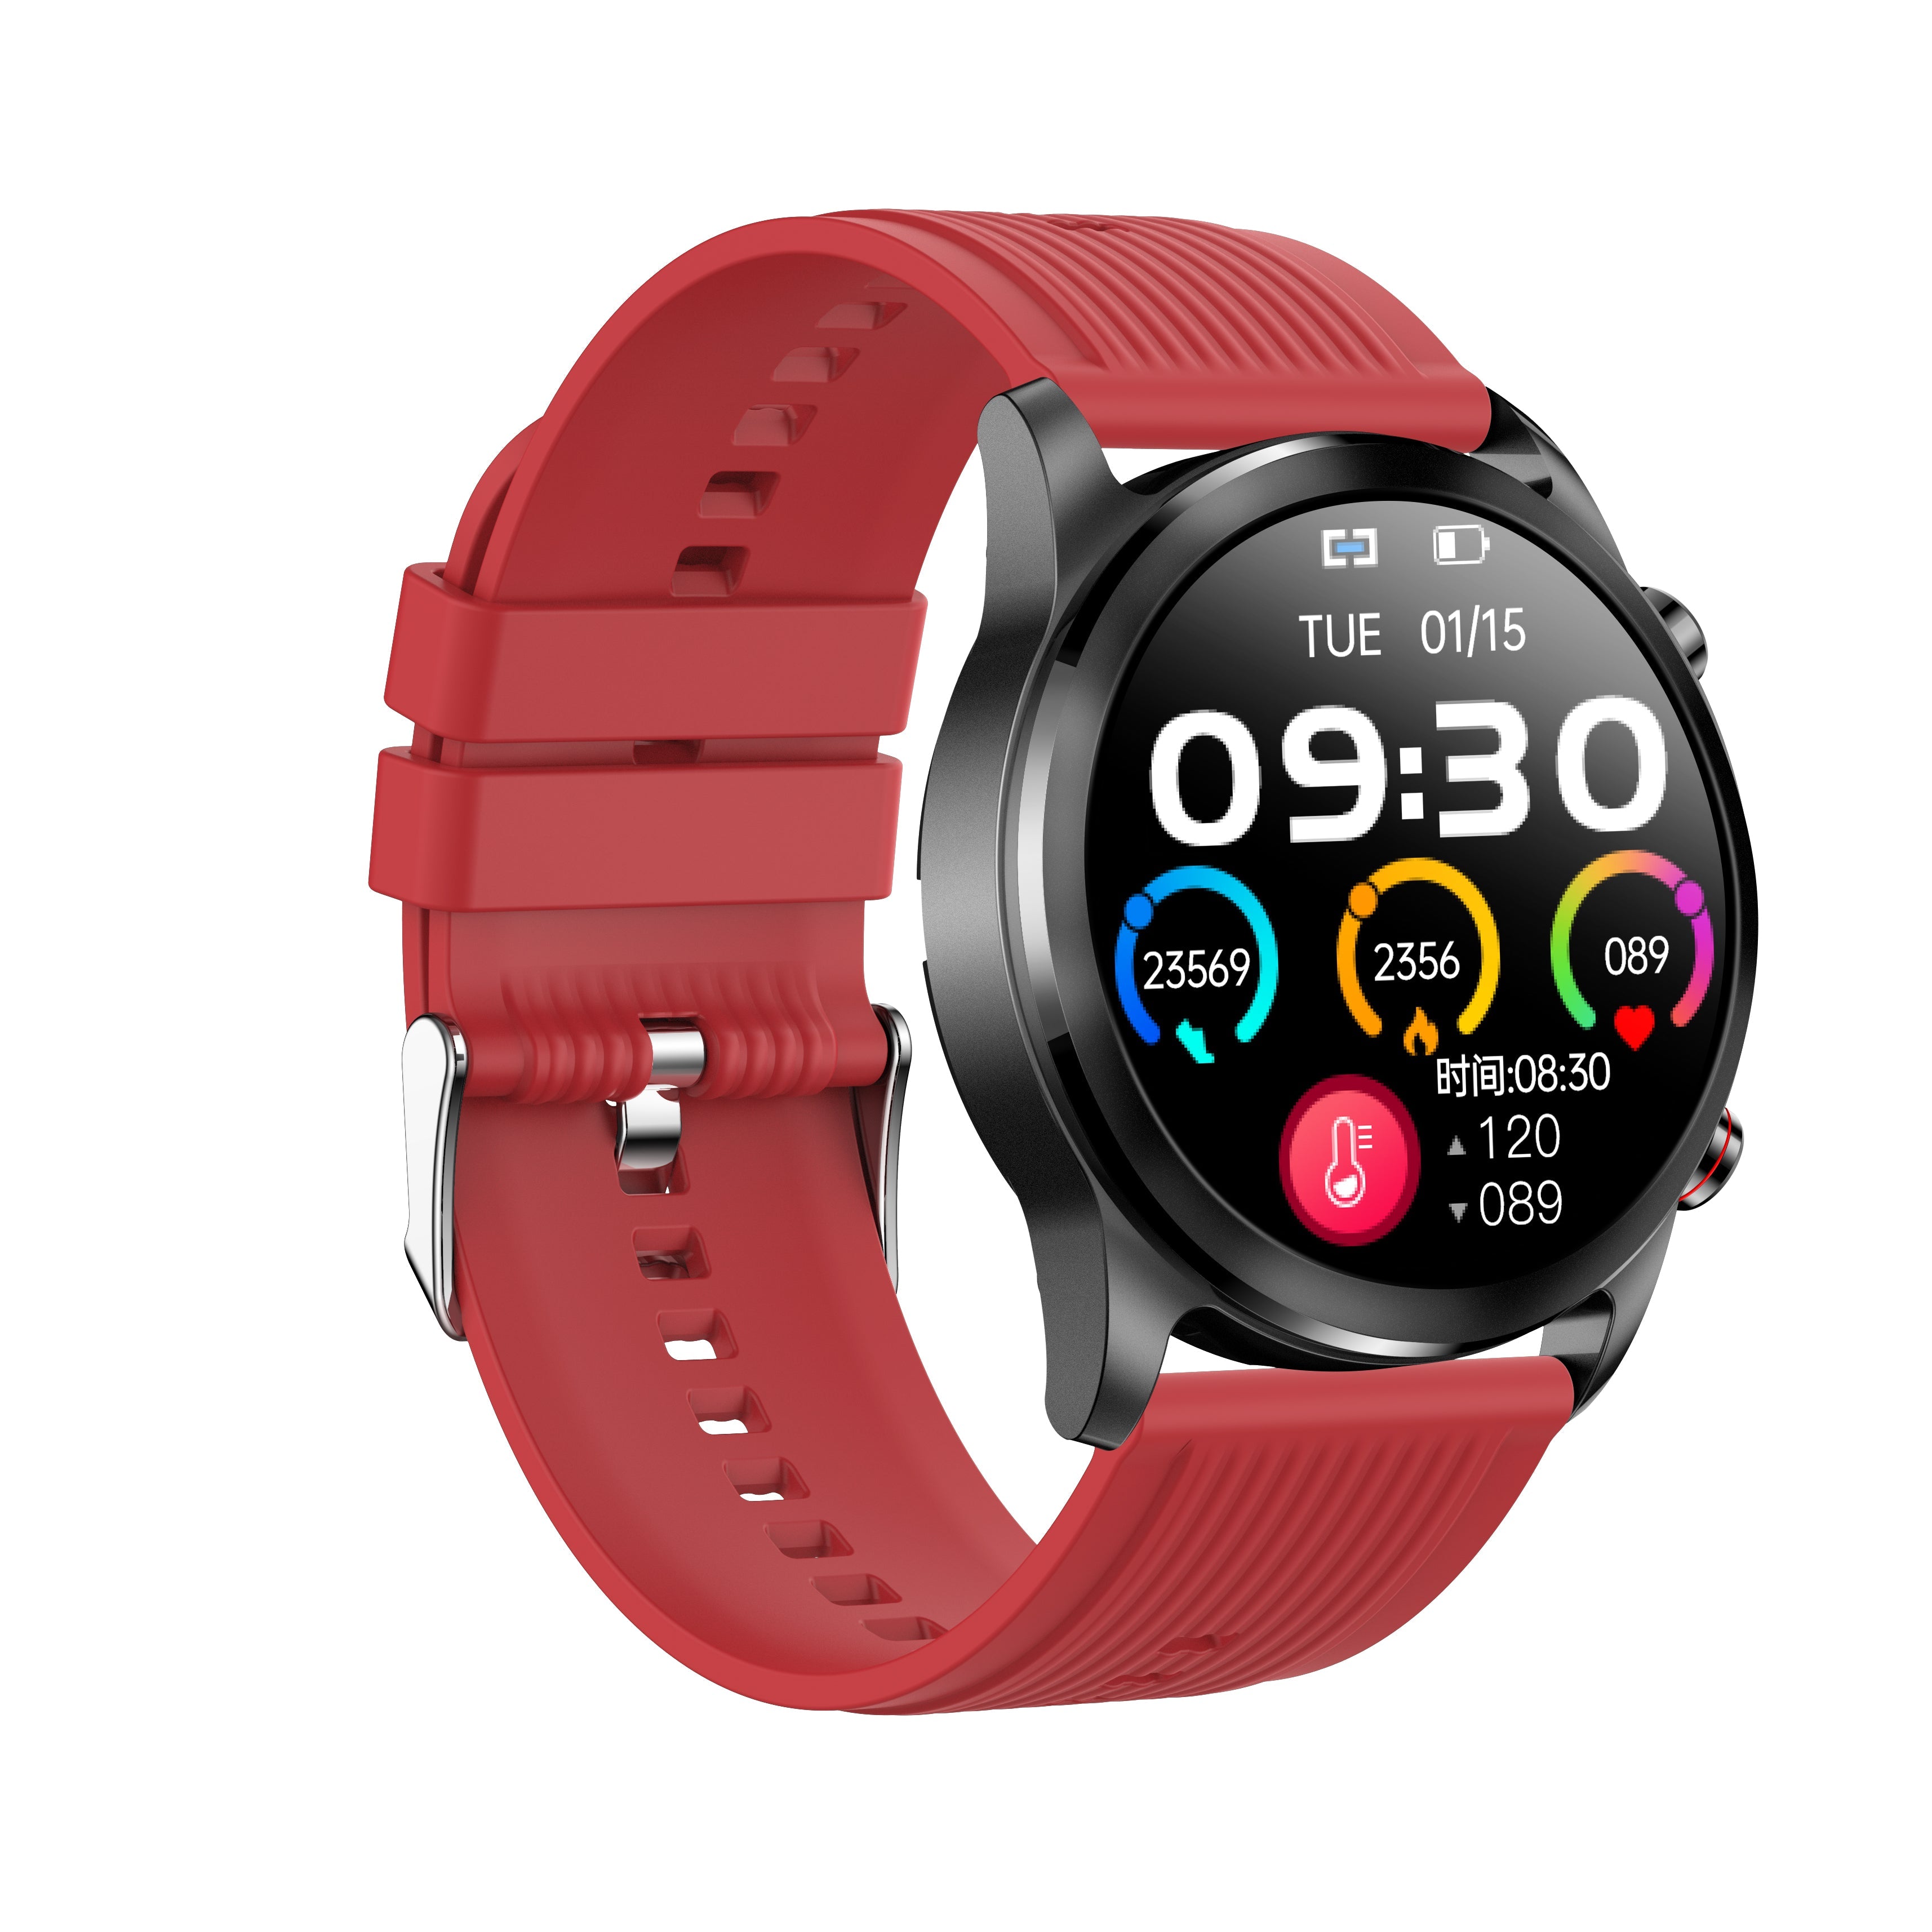 Casio BP-1B Blood Pressure Monitor Rare Digital Watch | eBay